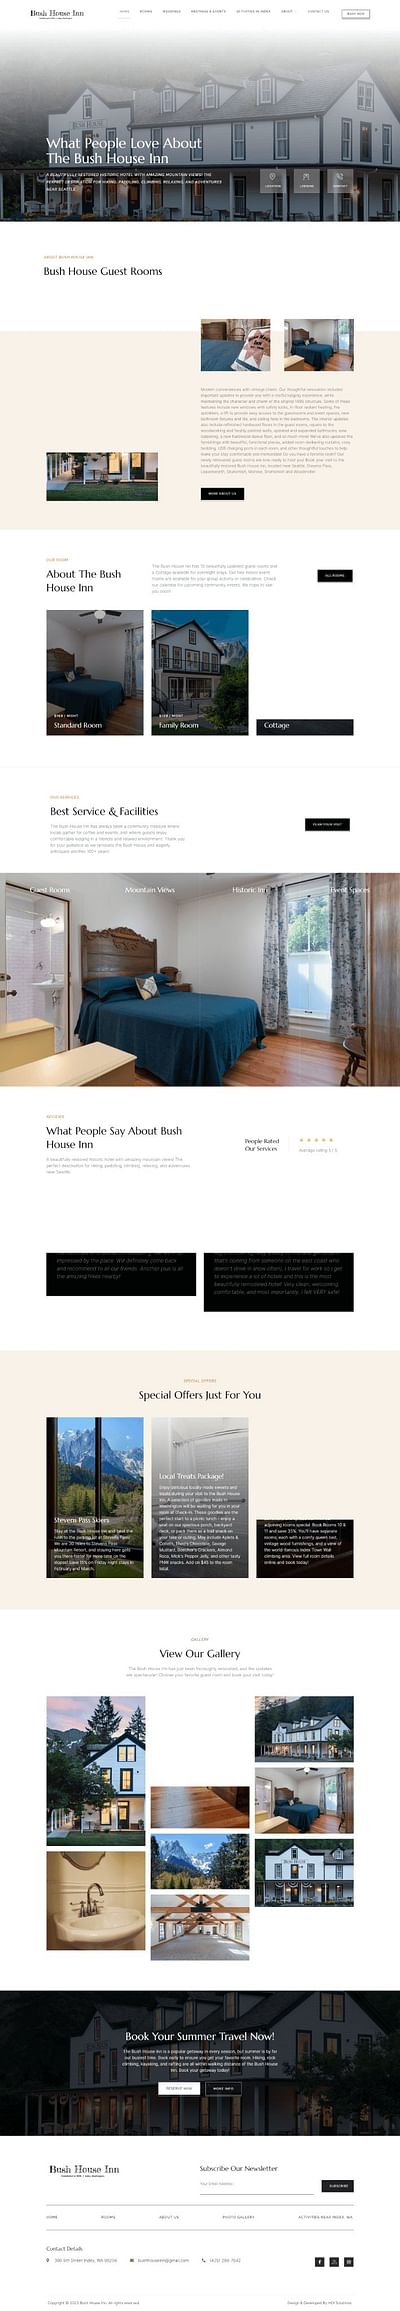 Bush House Inn - Website Creation